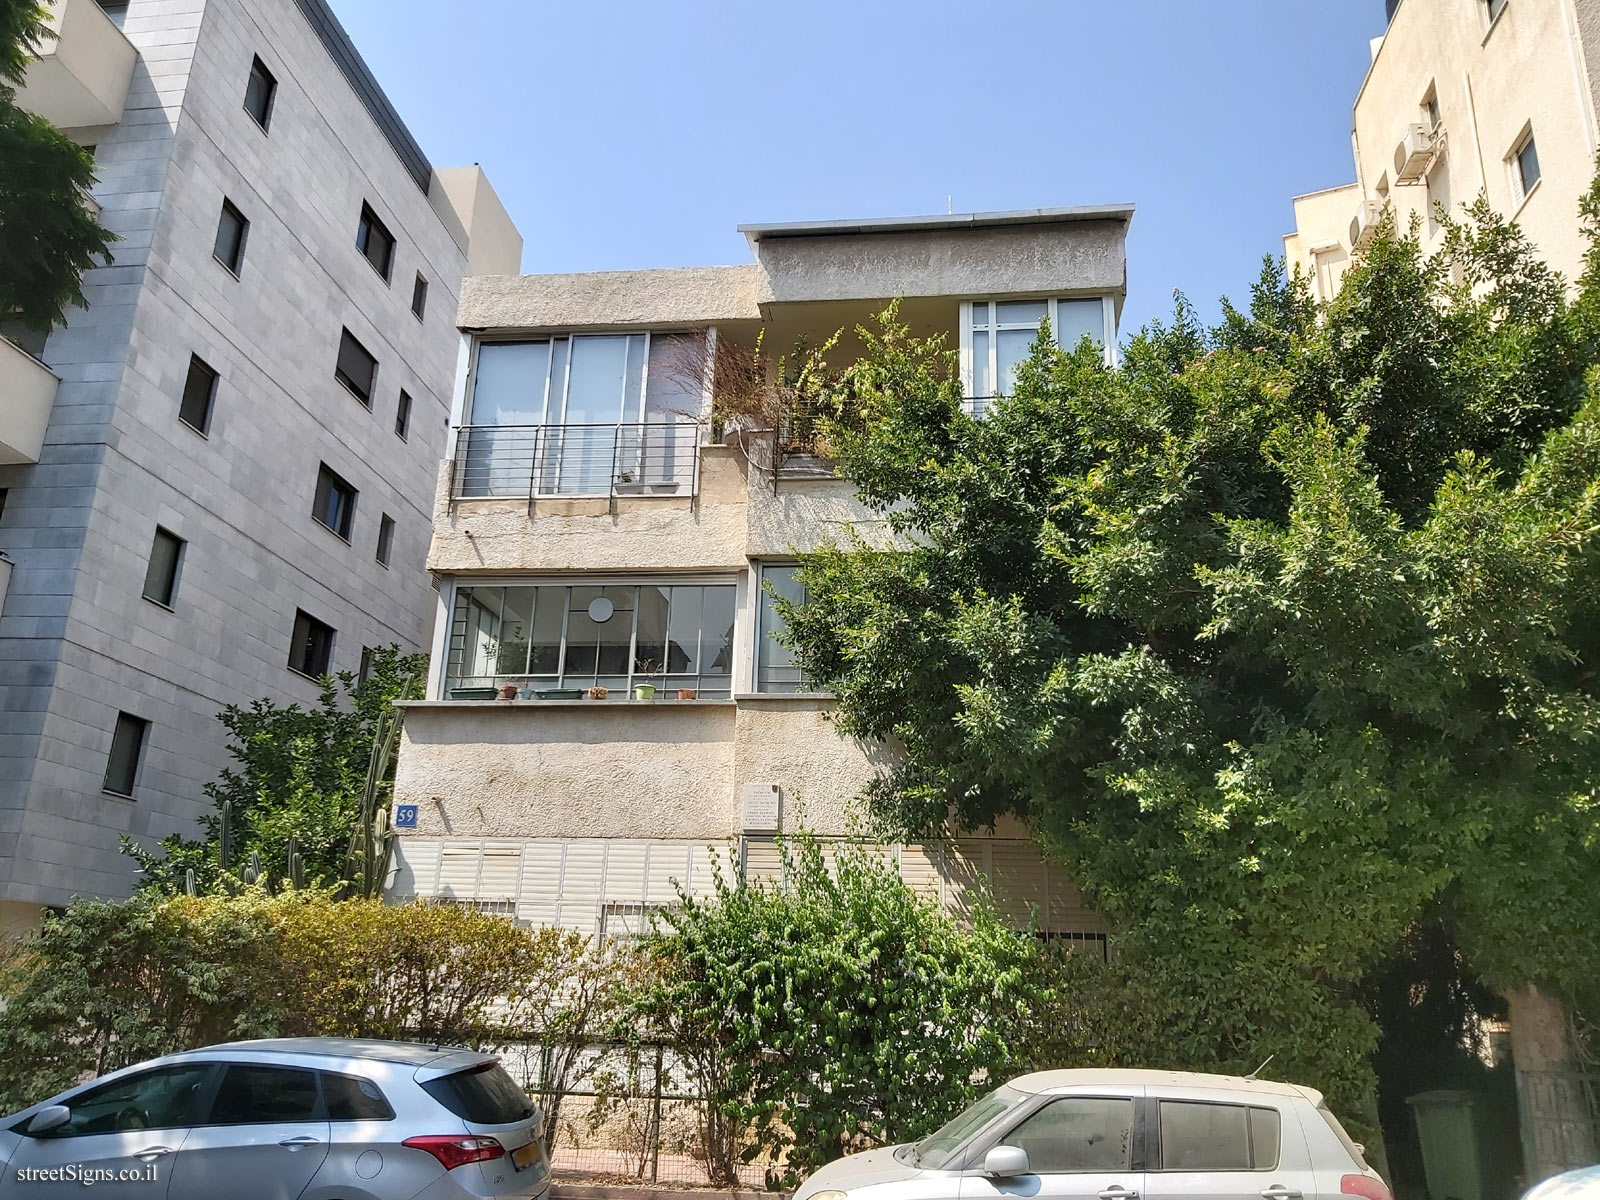 The house of Arie Allweil & Rachel Allweil Bograshov - Melchett St 59, Tel Aviv-Yafo, Israel